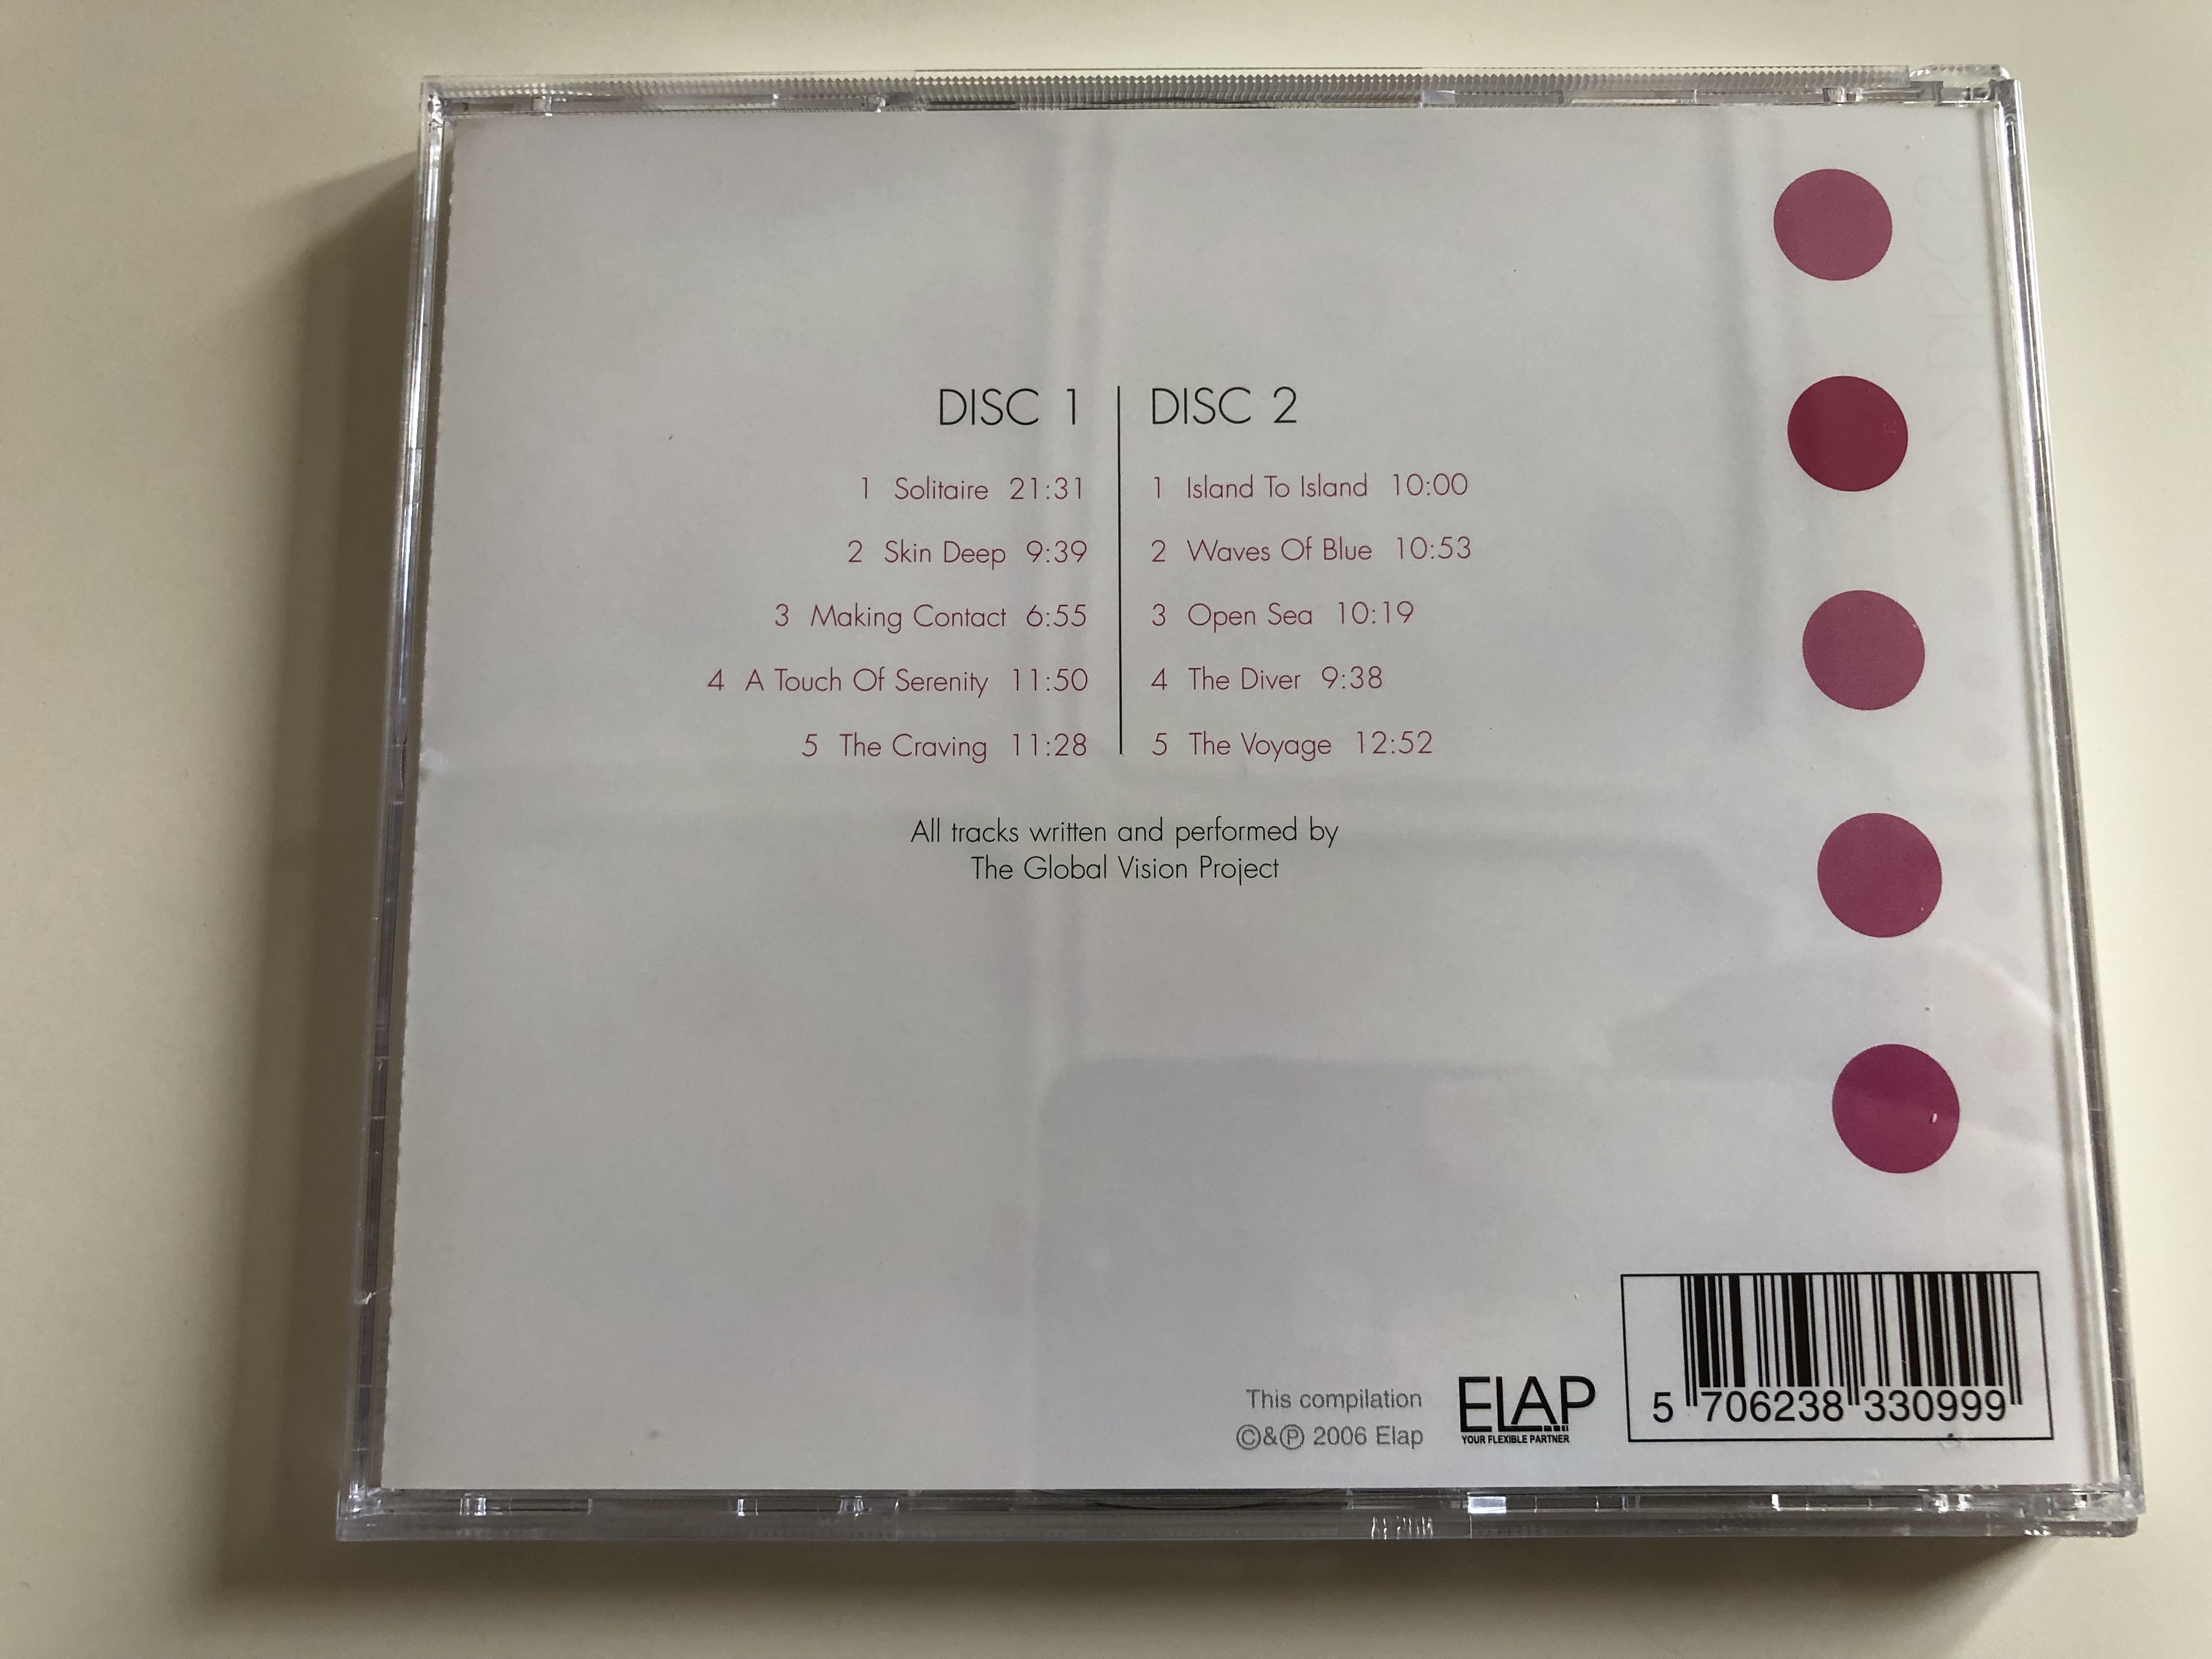 pure-wellness-2-discs-the-global-vision-project-audio-cd-2006-elap-3-.jpg